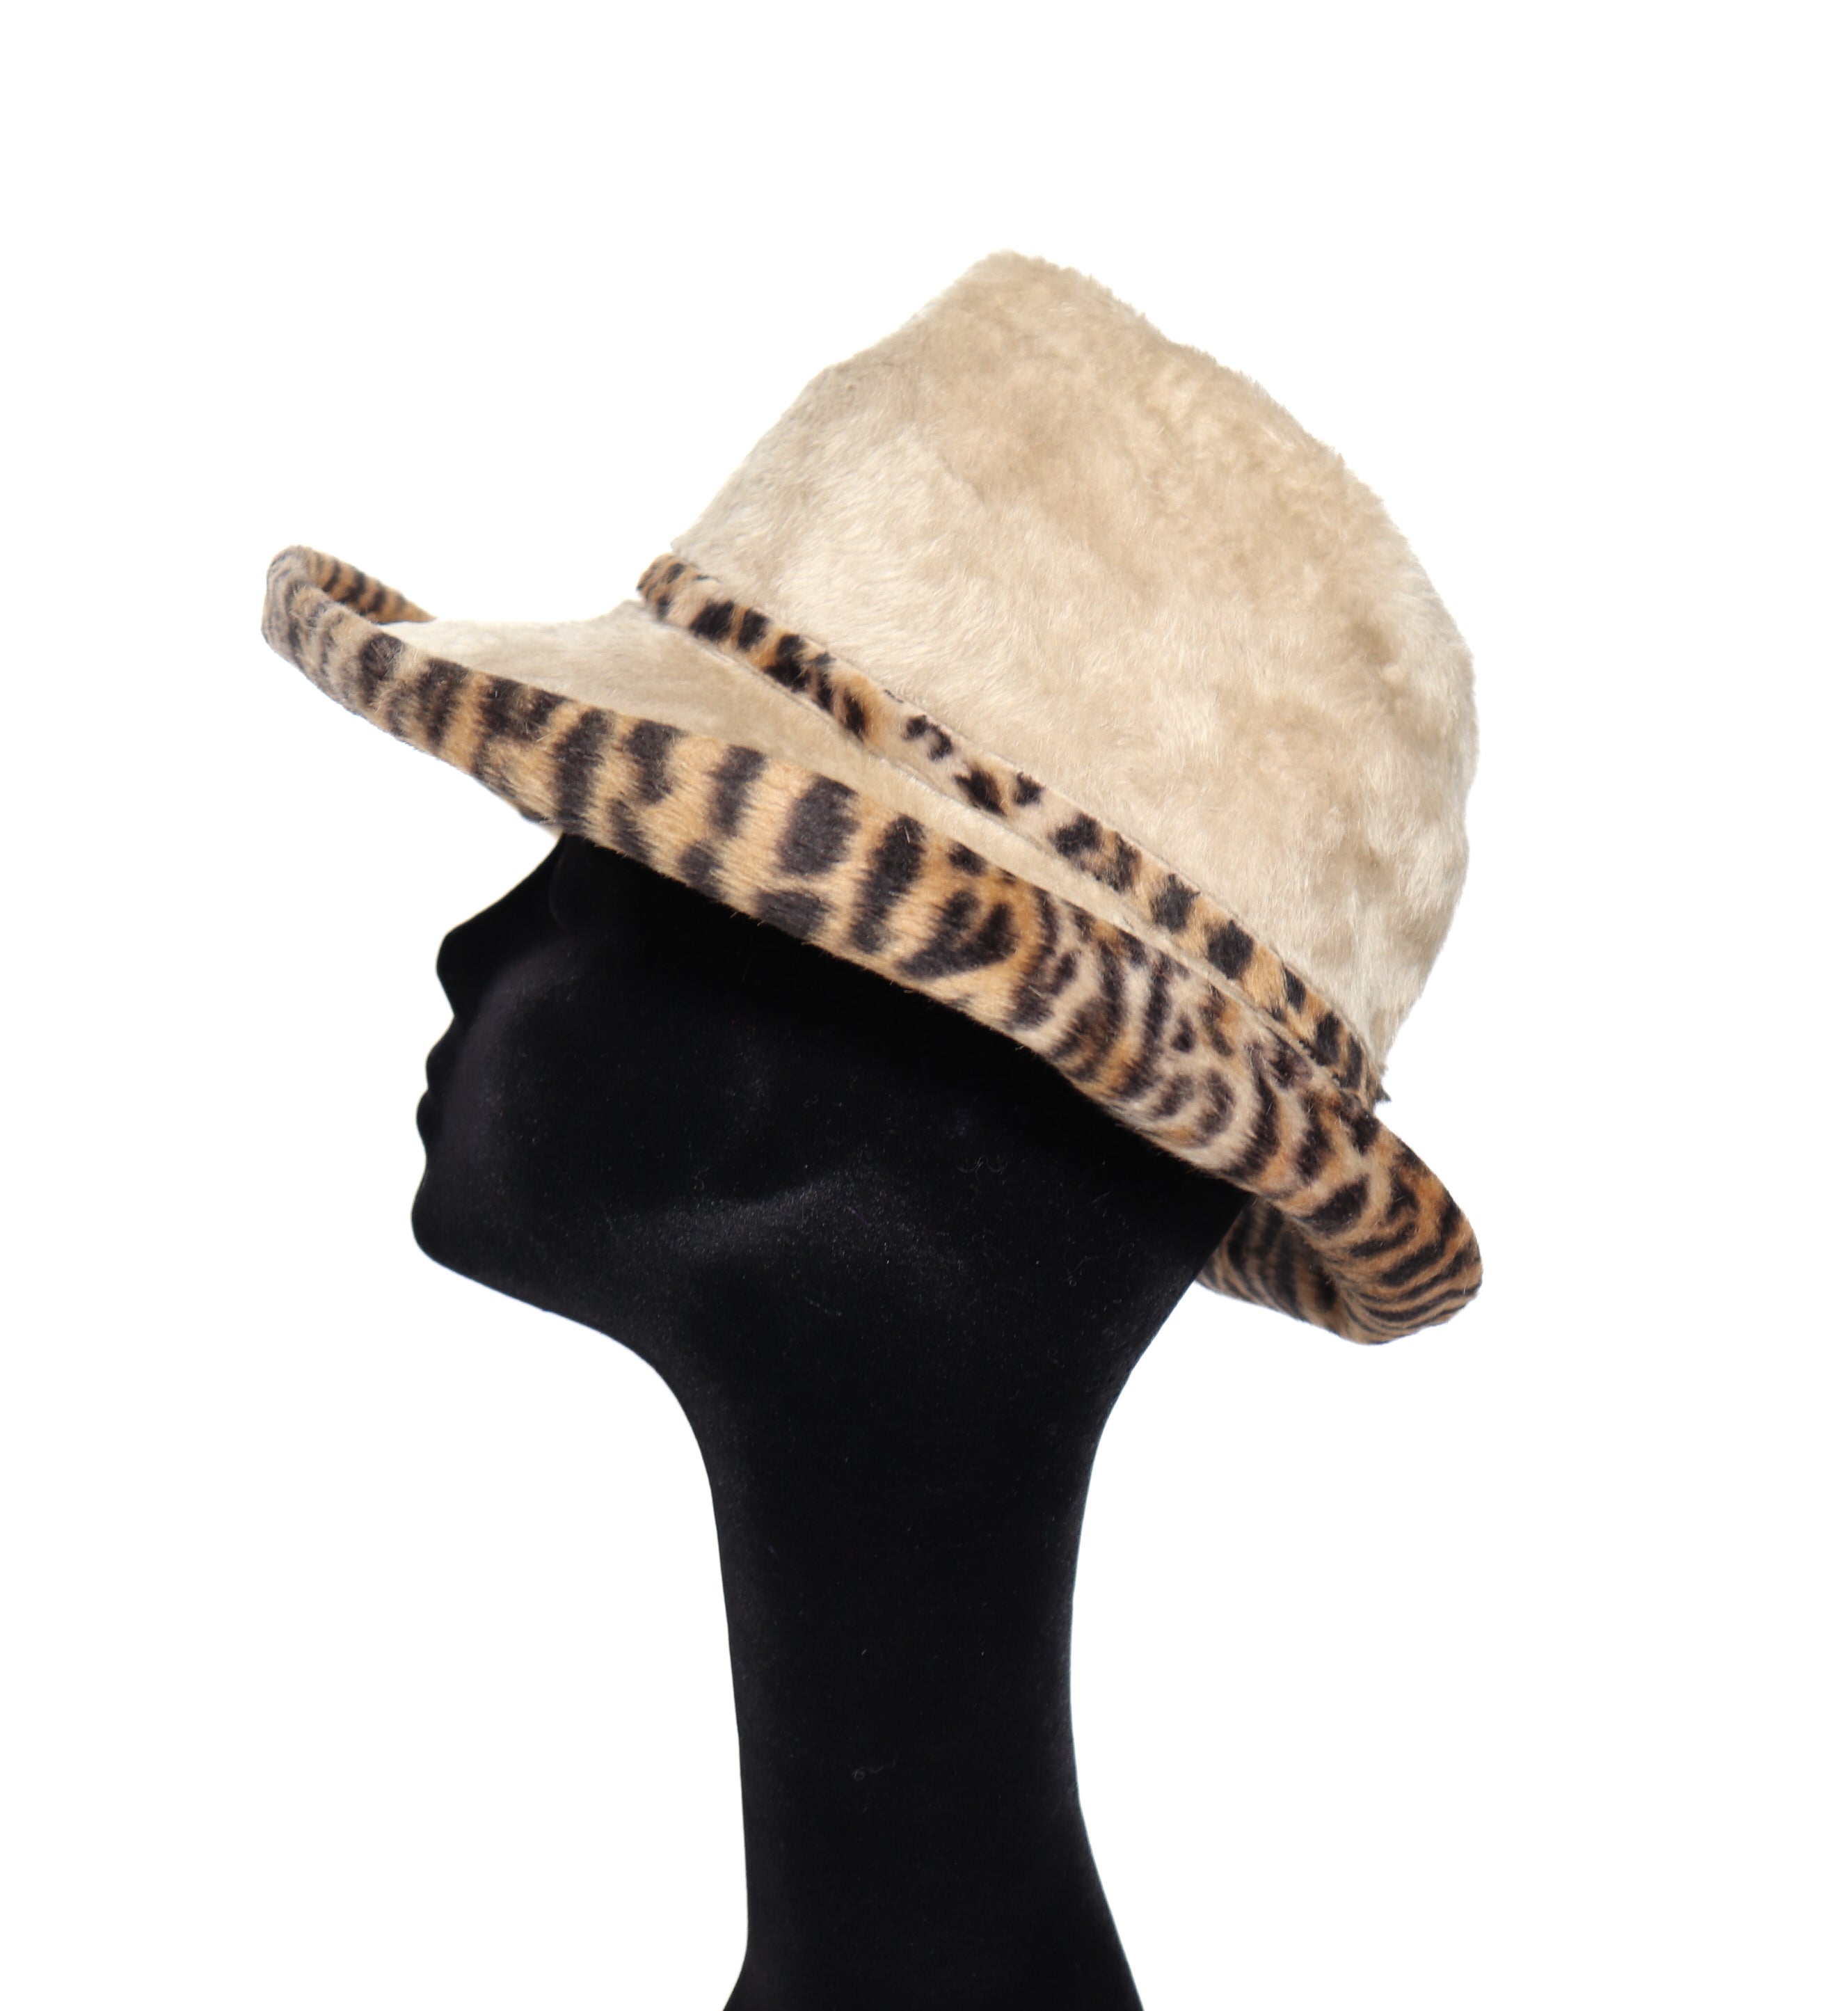 Vintage Ladies Fedora Hat - 1960s - Leopard Print - M